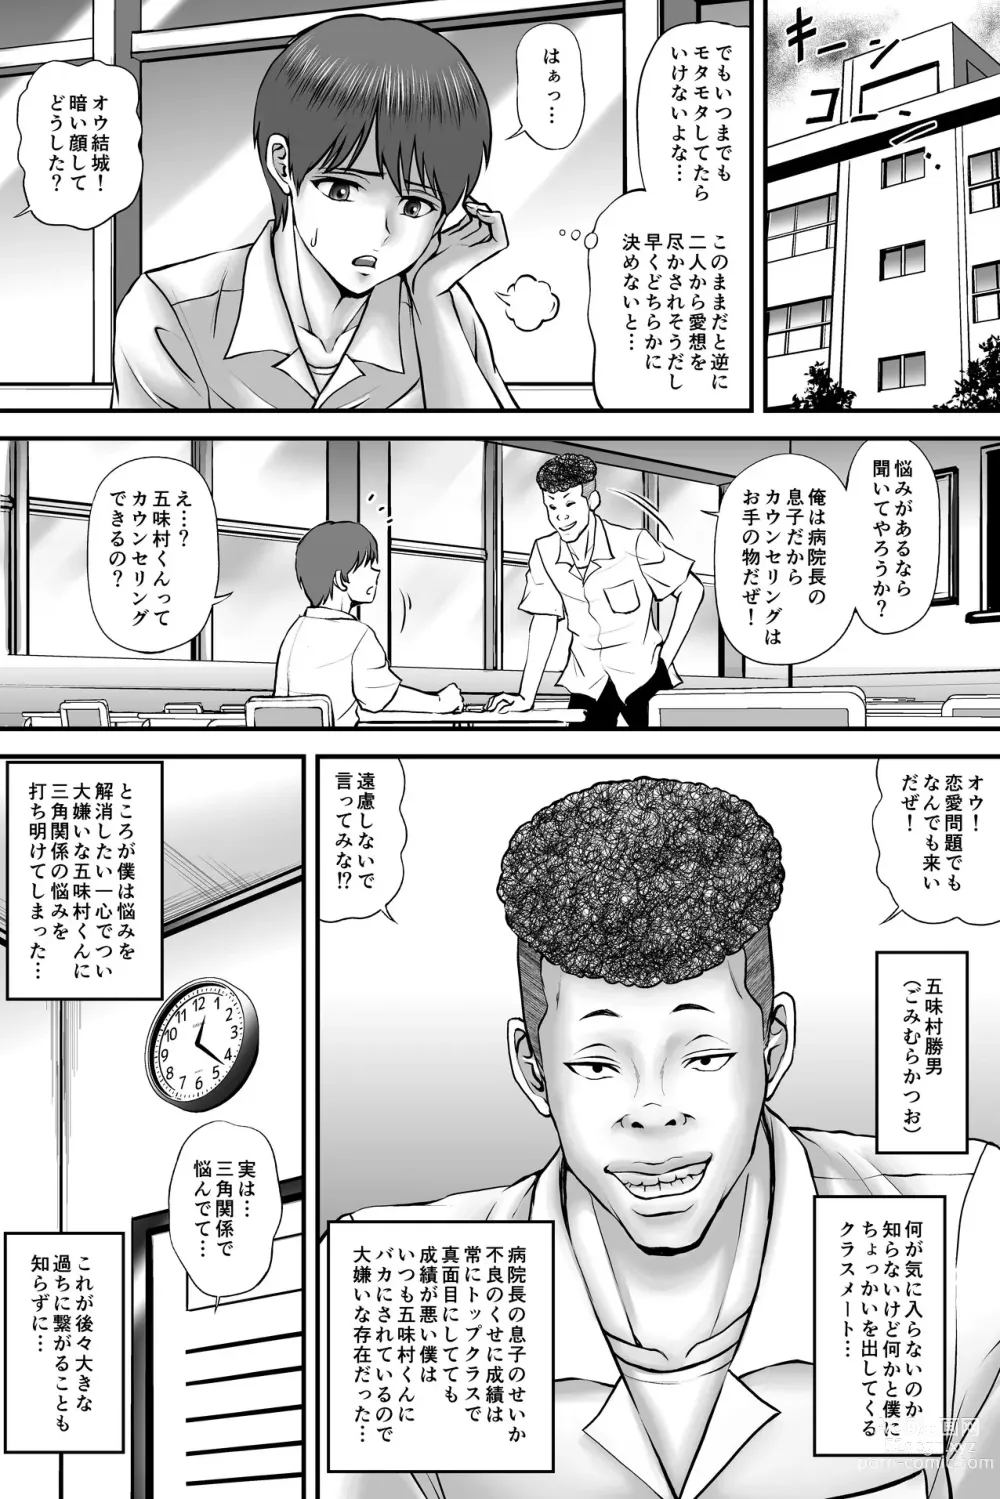 Page 9 of doujinshi 寝取られ愛情診断·1